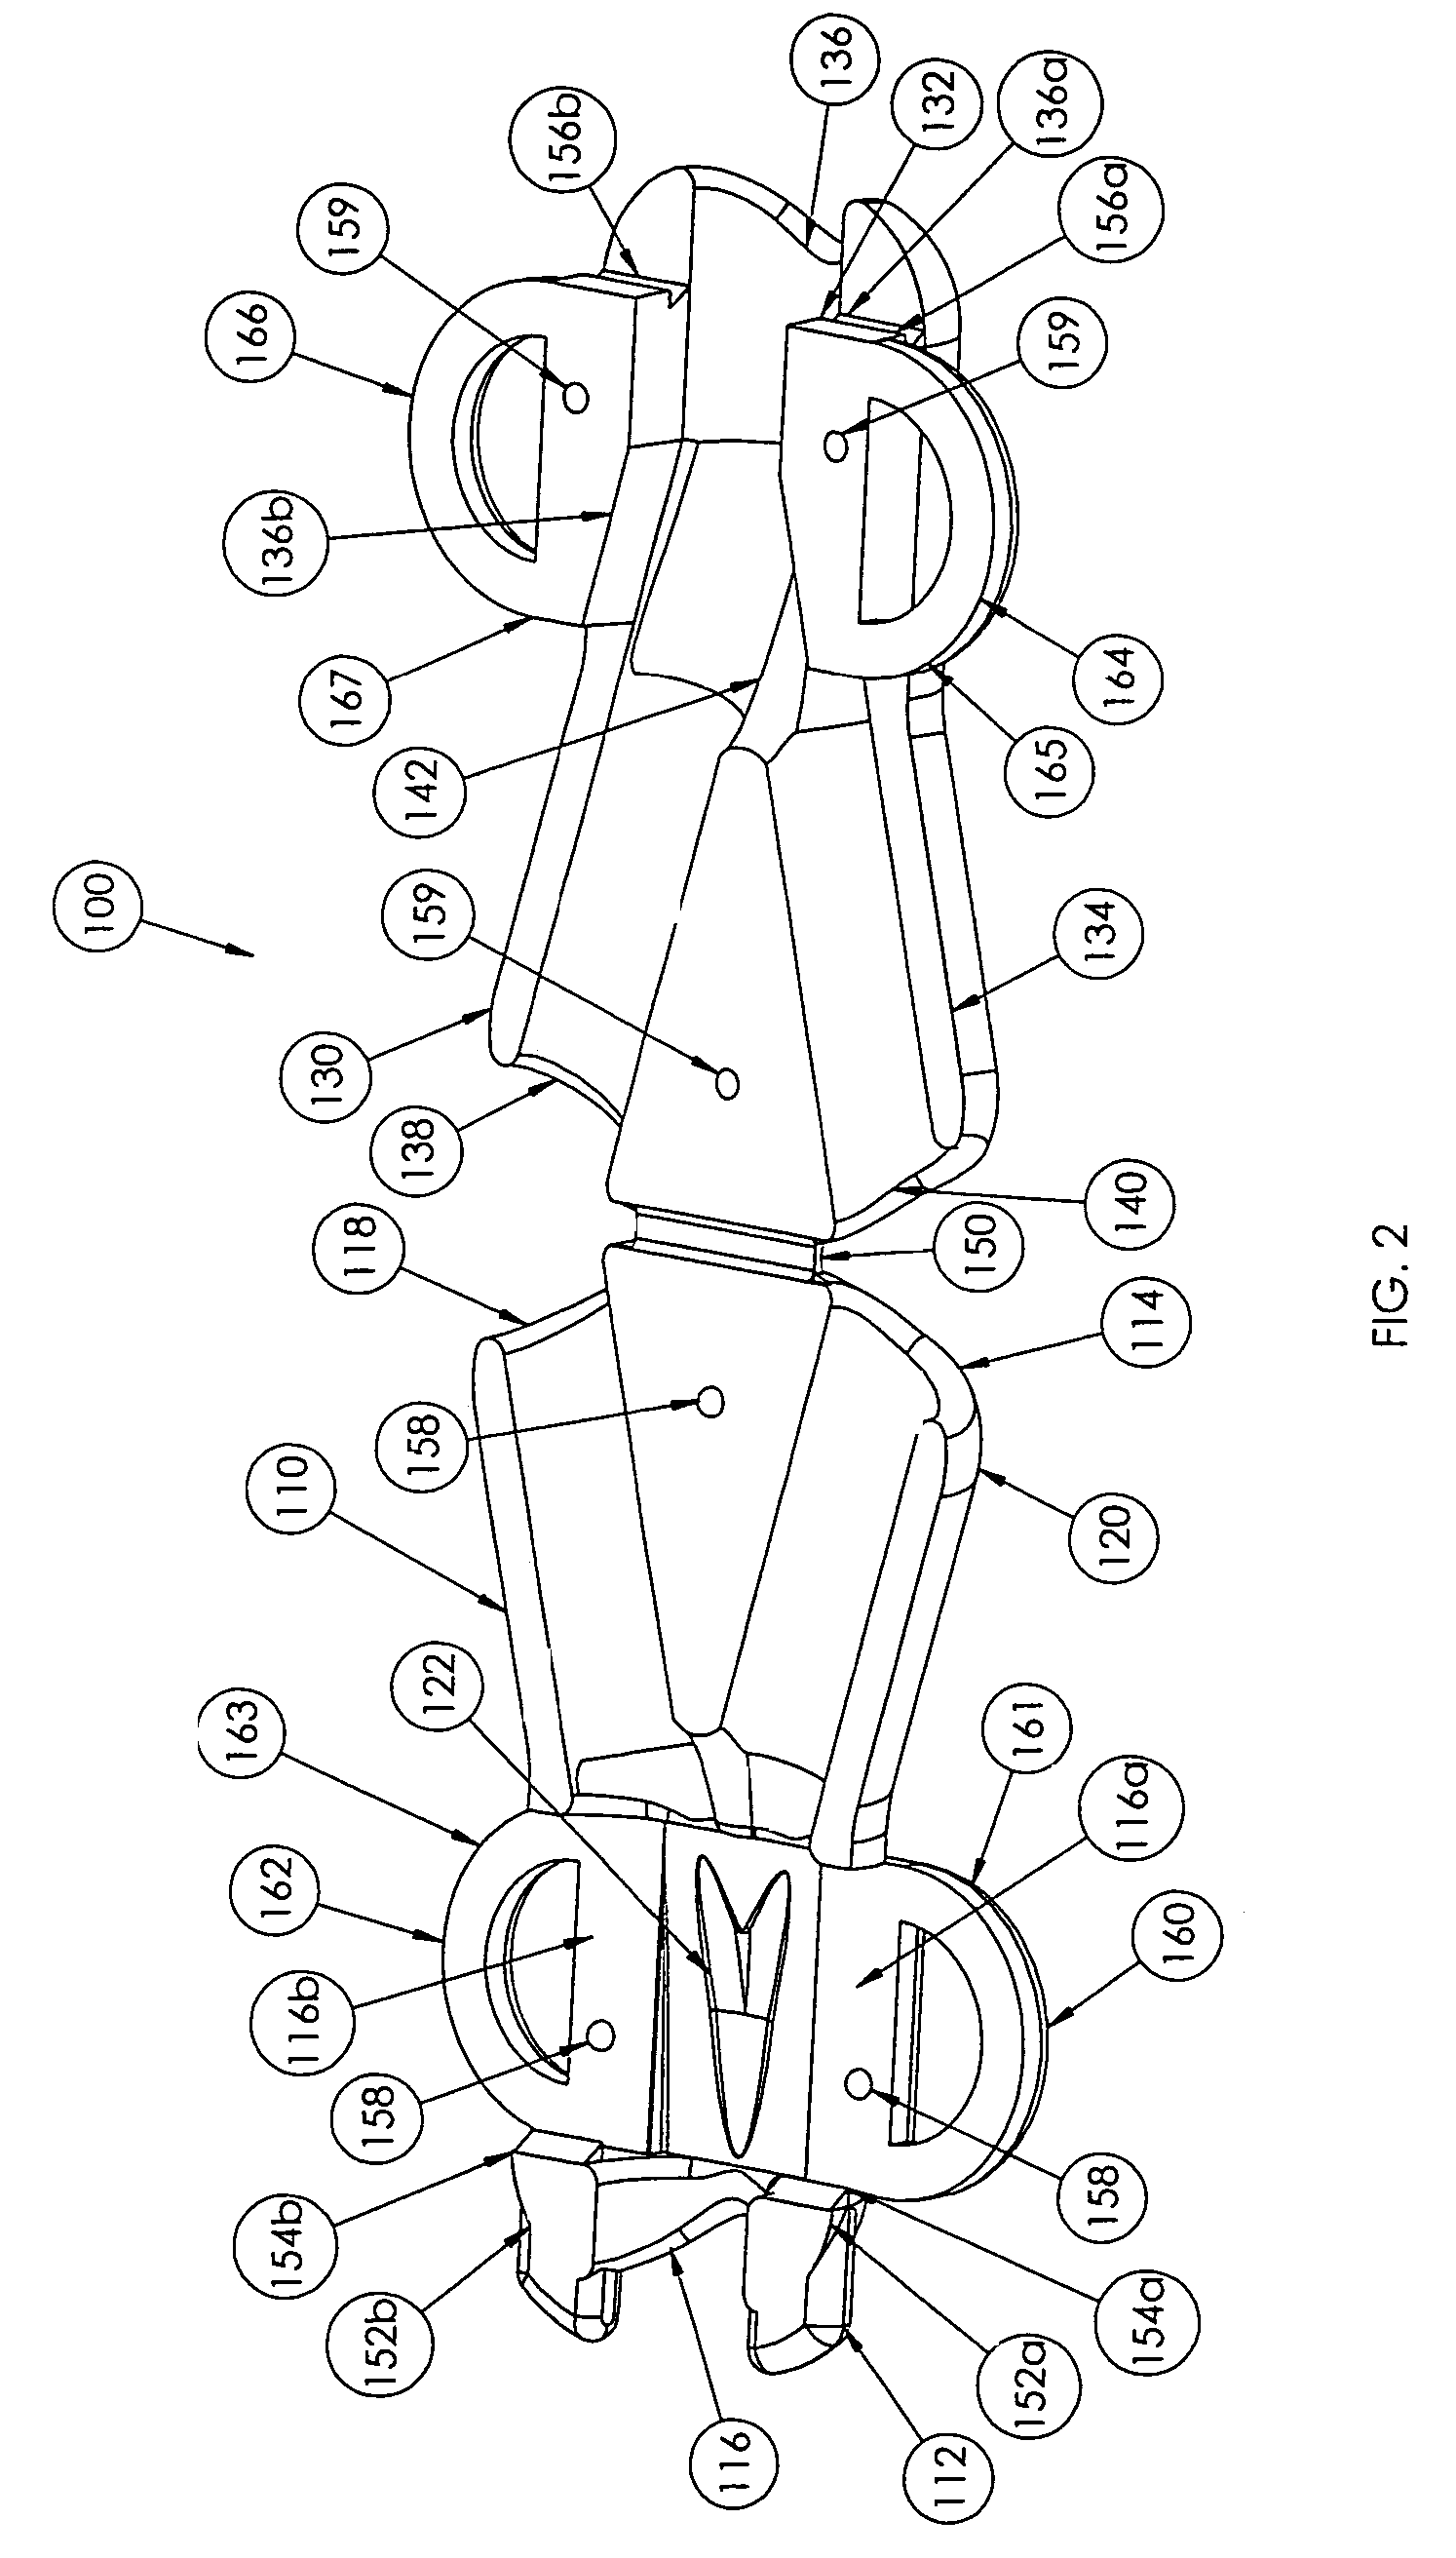 Removable catheter hub